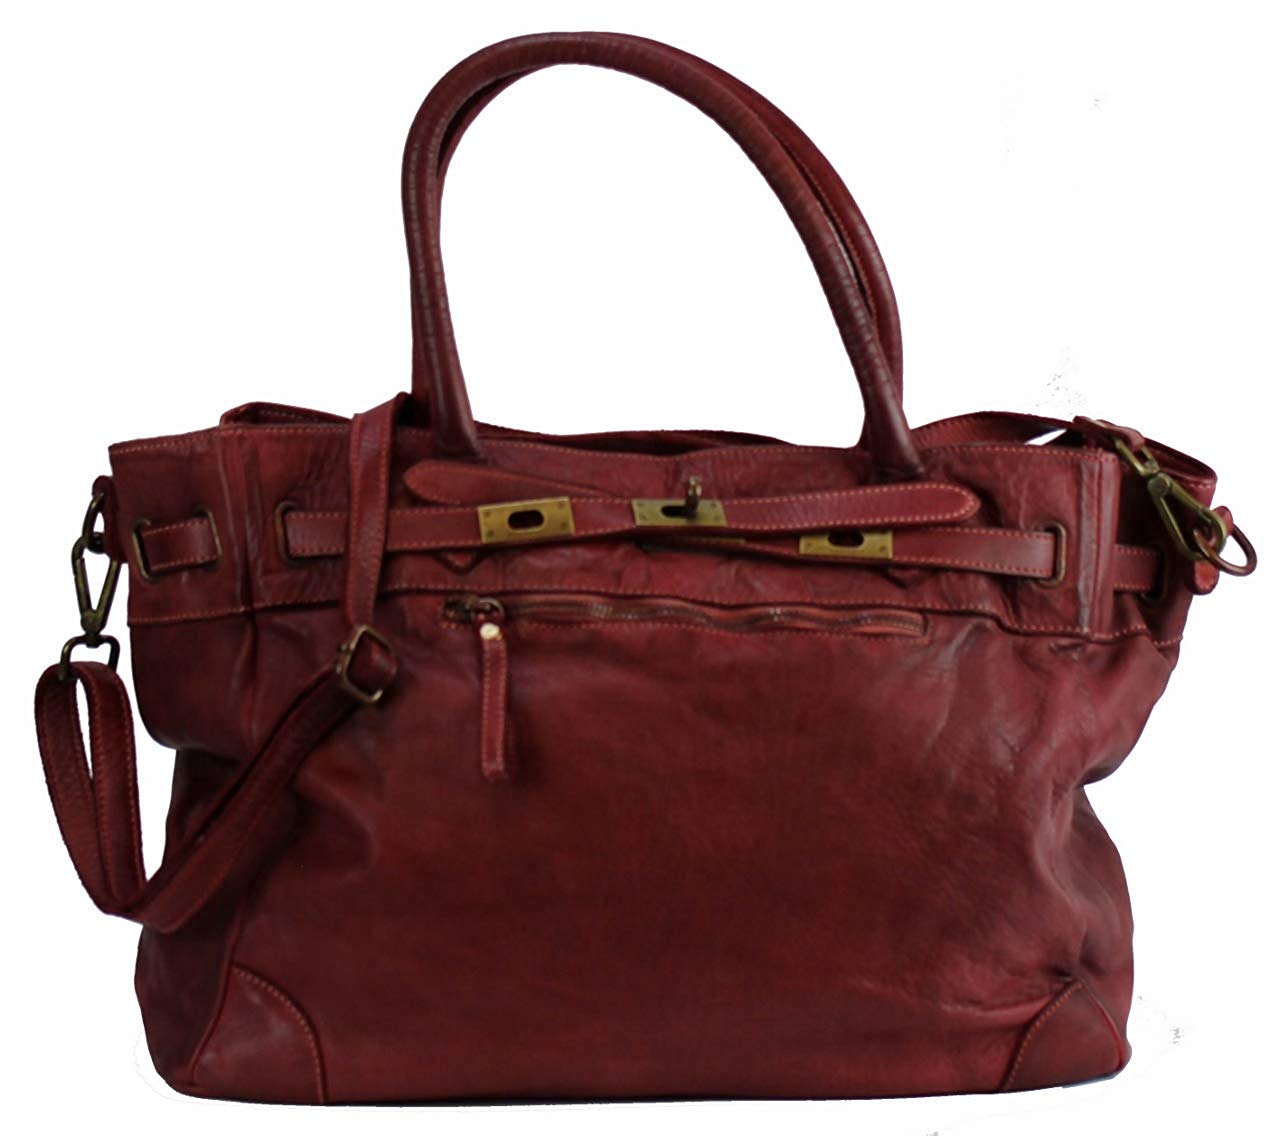 BZNA Bag Mila Weinrot vintage Italy Designer Business Damen Handtasche Ledertasche Schultertasche Tasche Leder Shopper Neu